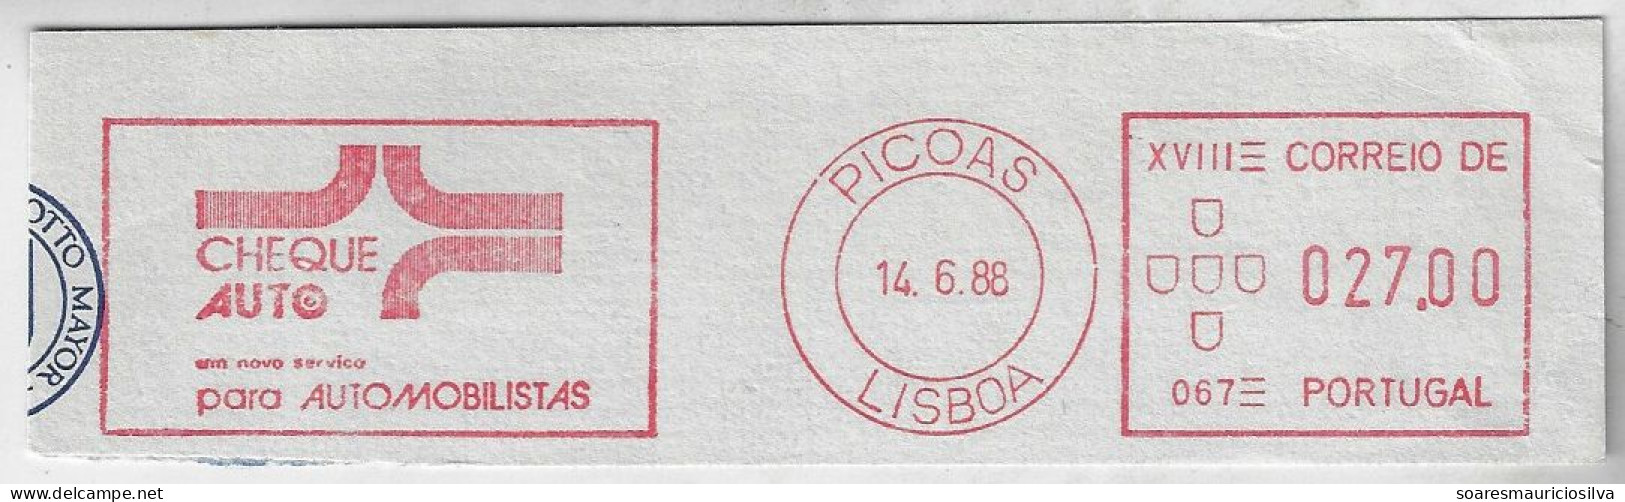 Portugal 1988 Cover Fragment Meter Stamp Hasler Mailmaster Slogan Check Auto A New Service For Motorists Lisbon Picoa - Brieven En Documenten